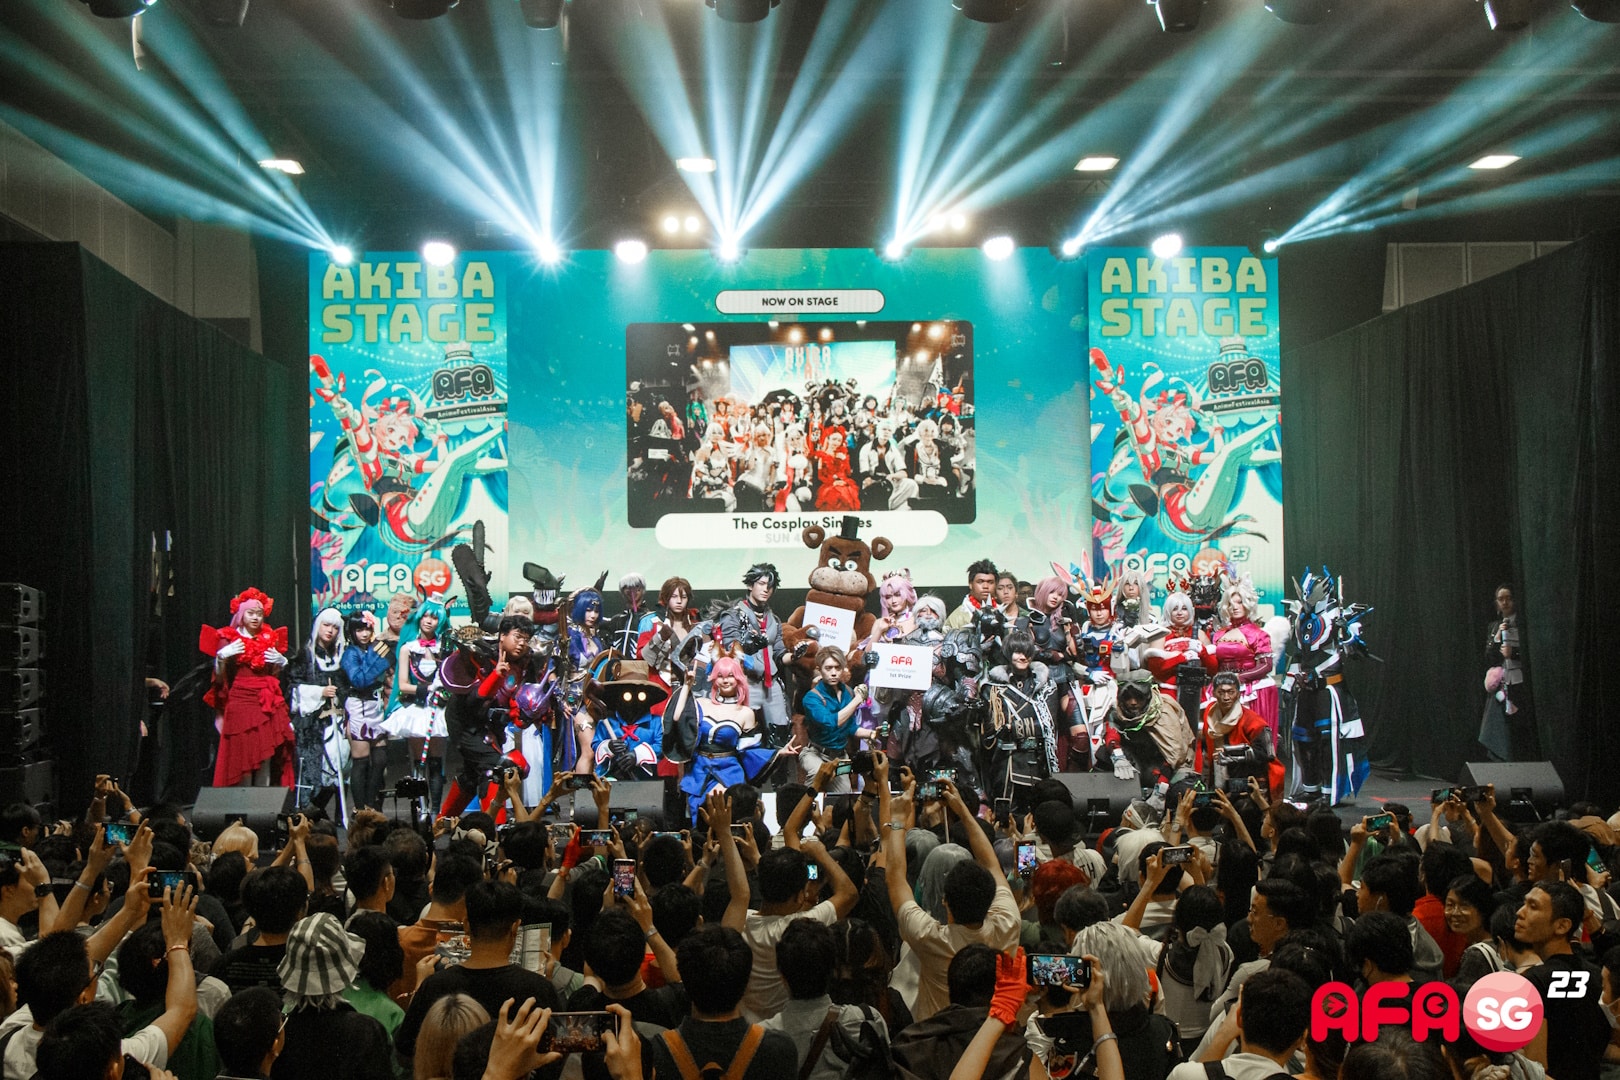 Anime Festival Asia Singapore 2022 returns to Suntec City on 25-27